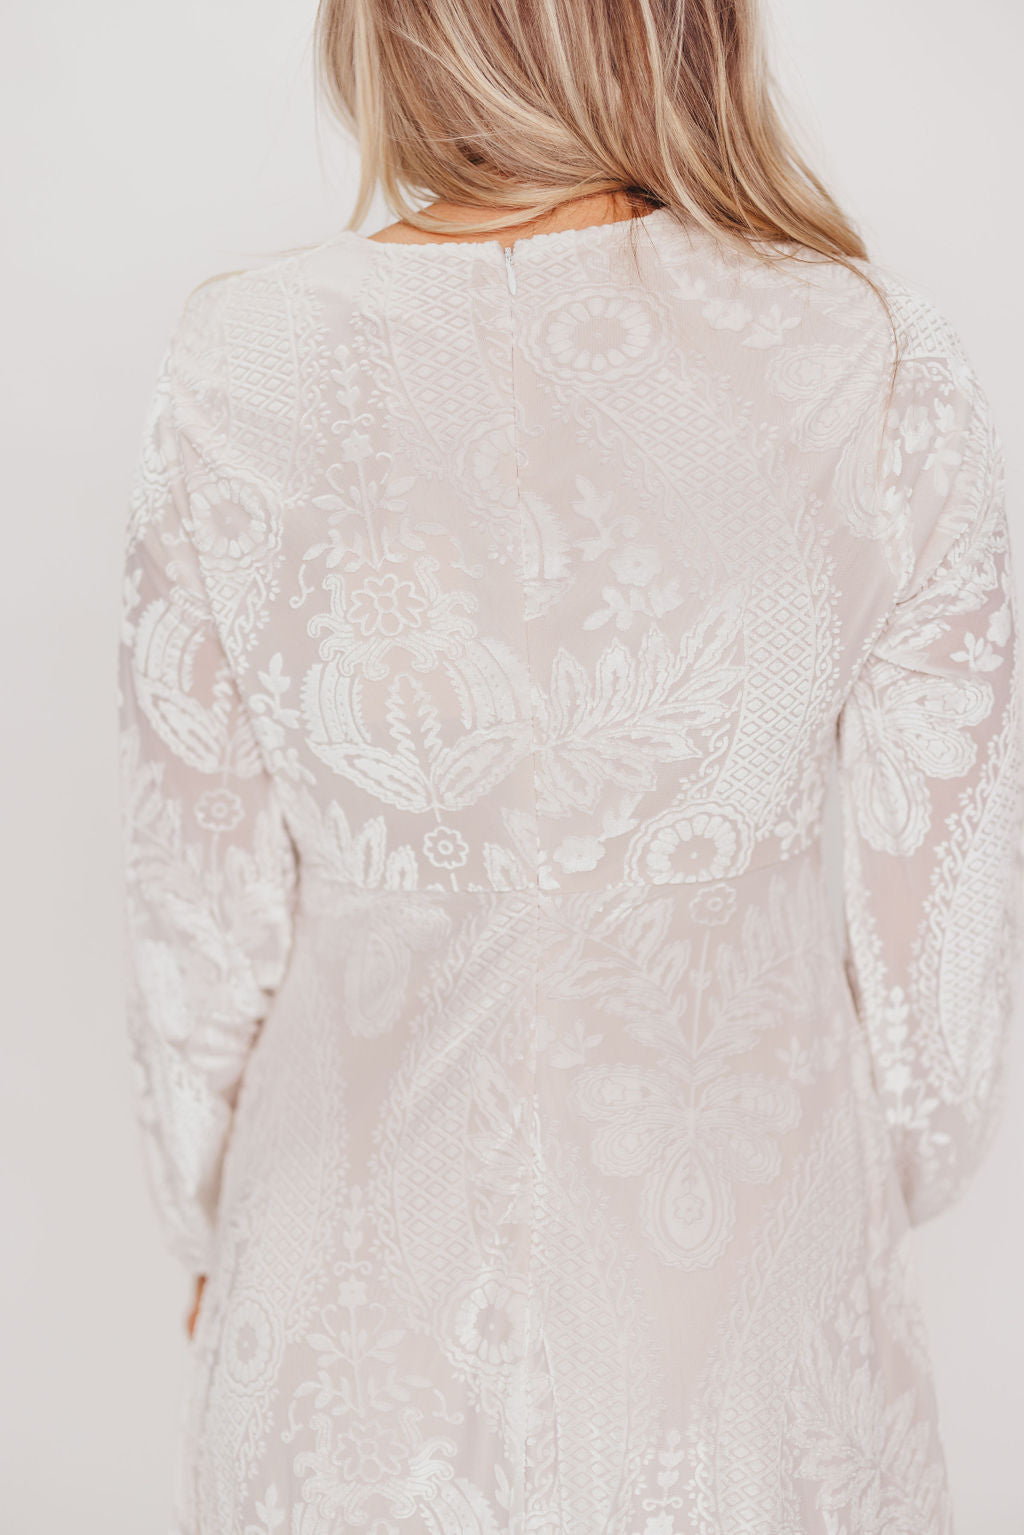 Jenni Velvet Burnout Midi Dress in Ivory - Inclusive Sizing (S-3XL)